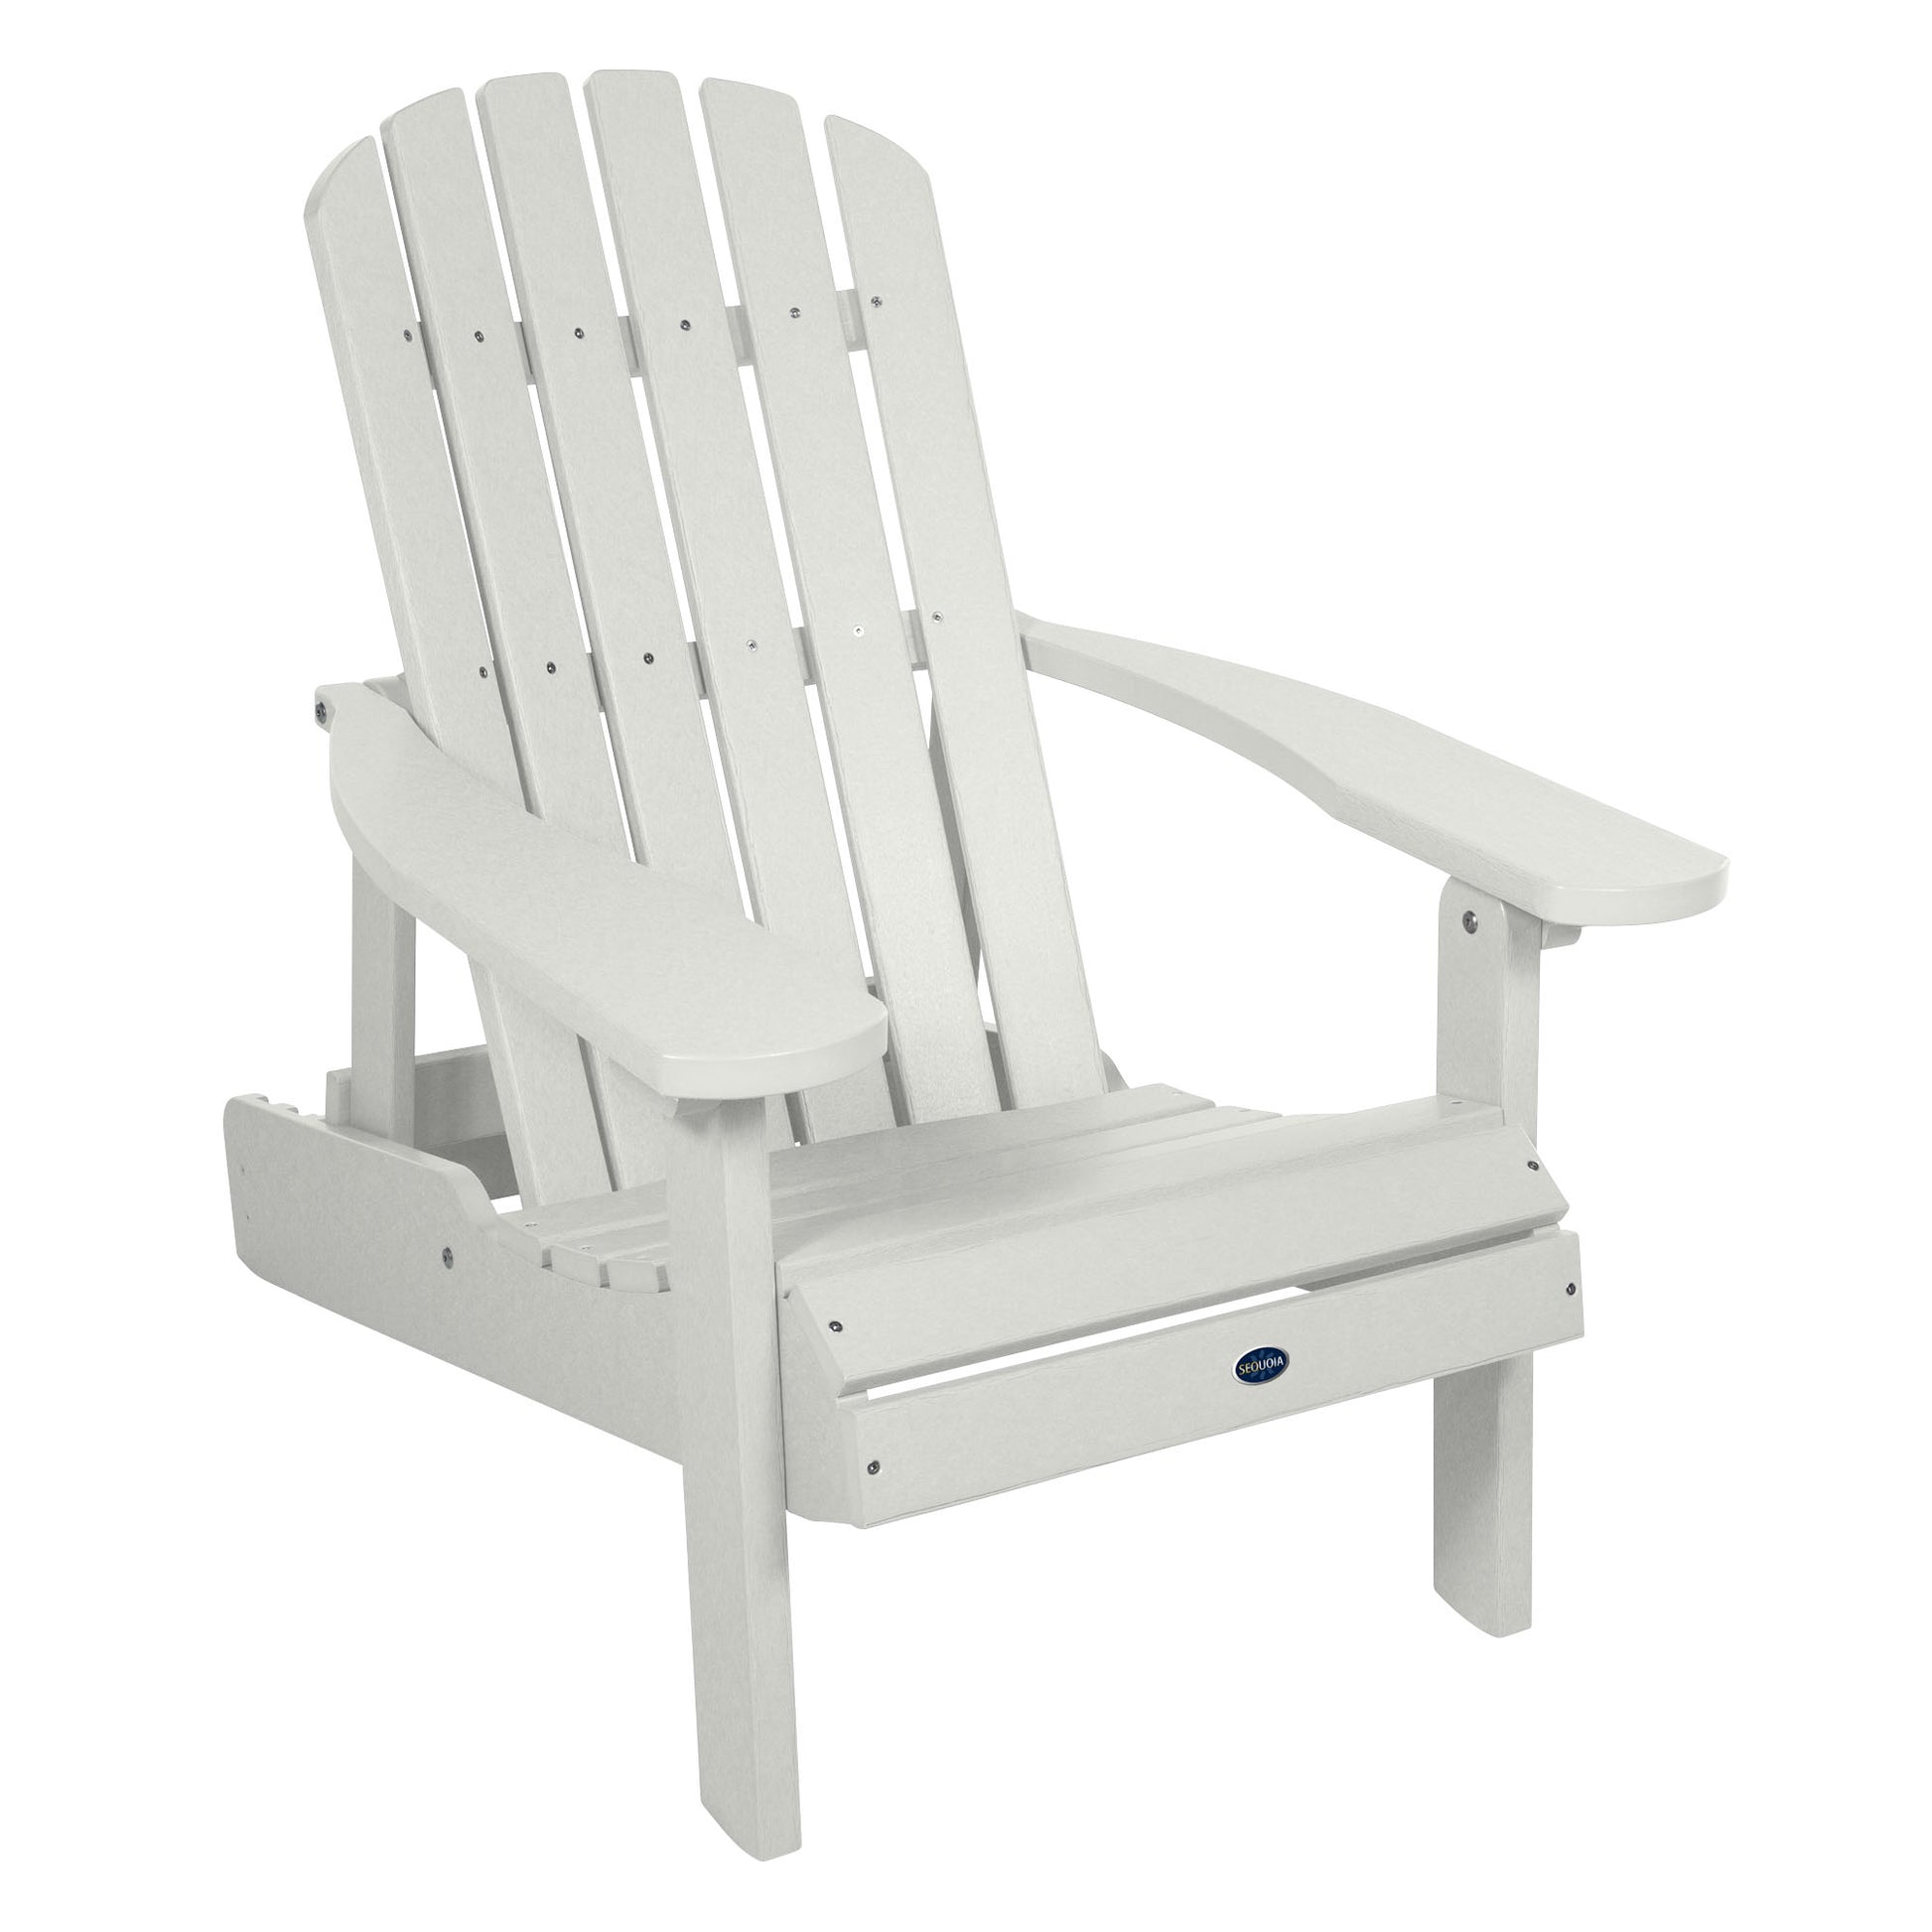 Sunrise Coast reclining Adirondack chair in Coconut White